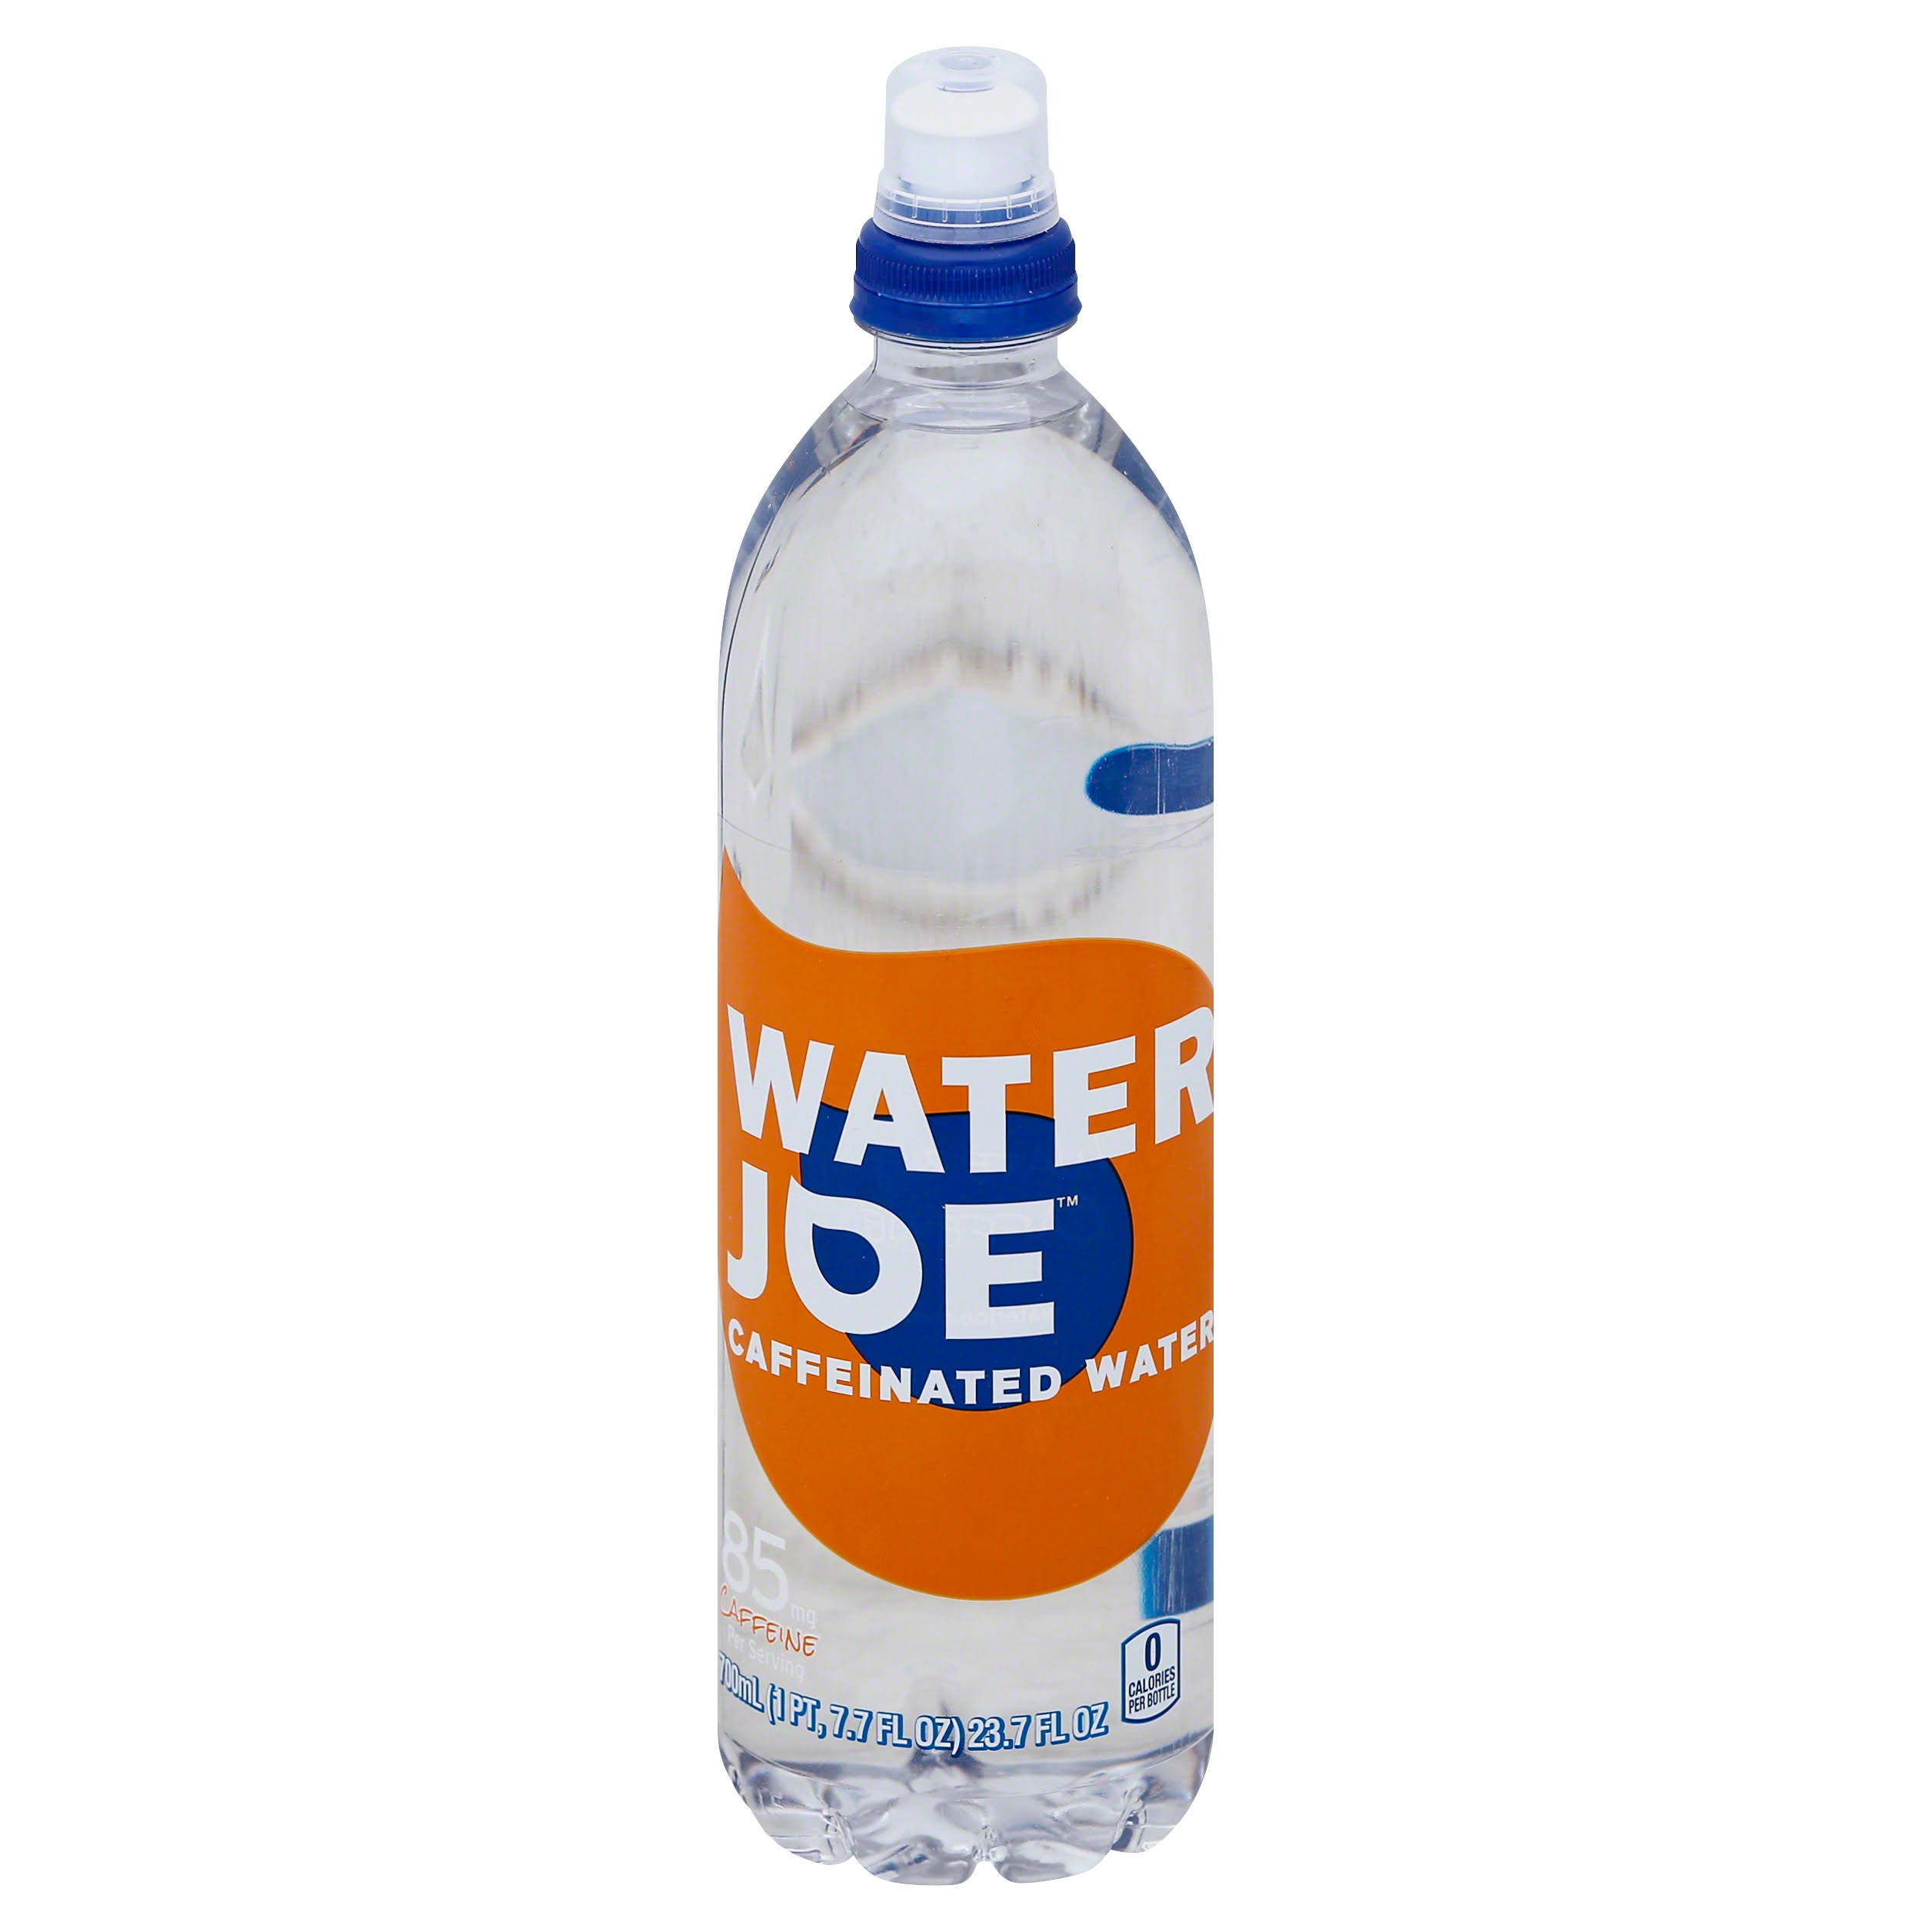 Water Joe Water, Caffeinated - 23.7 fl oz